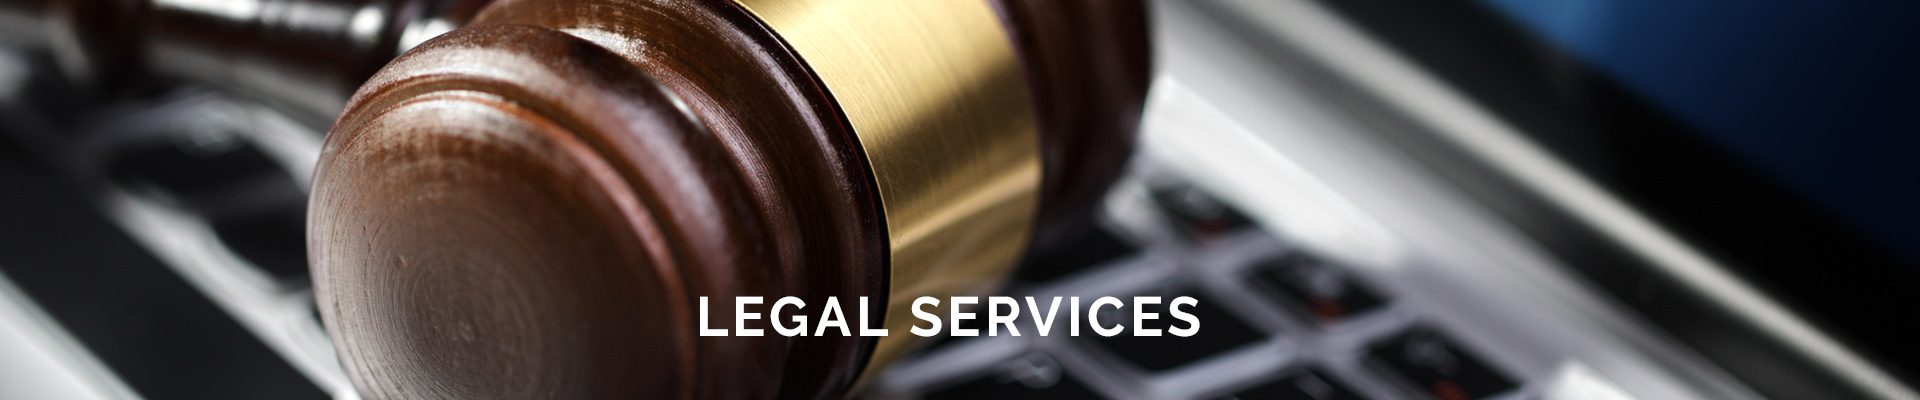 legal_services_header